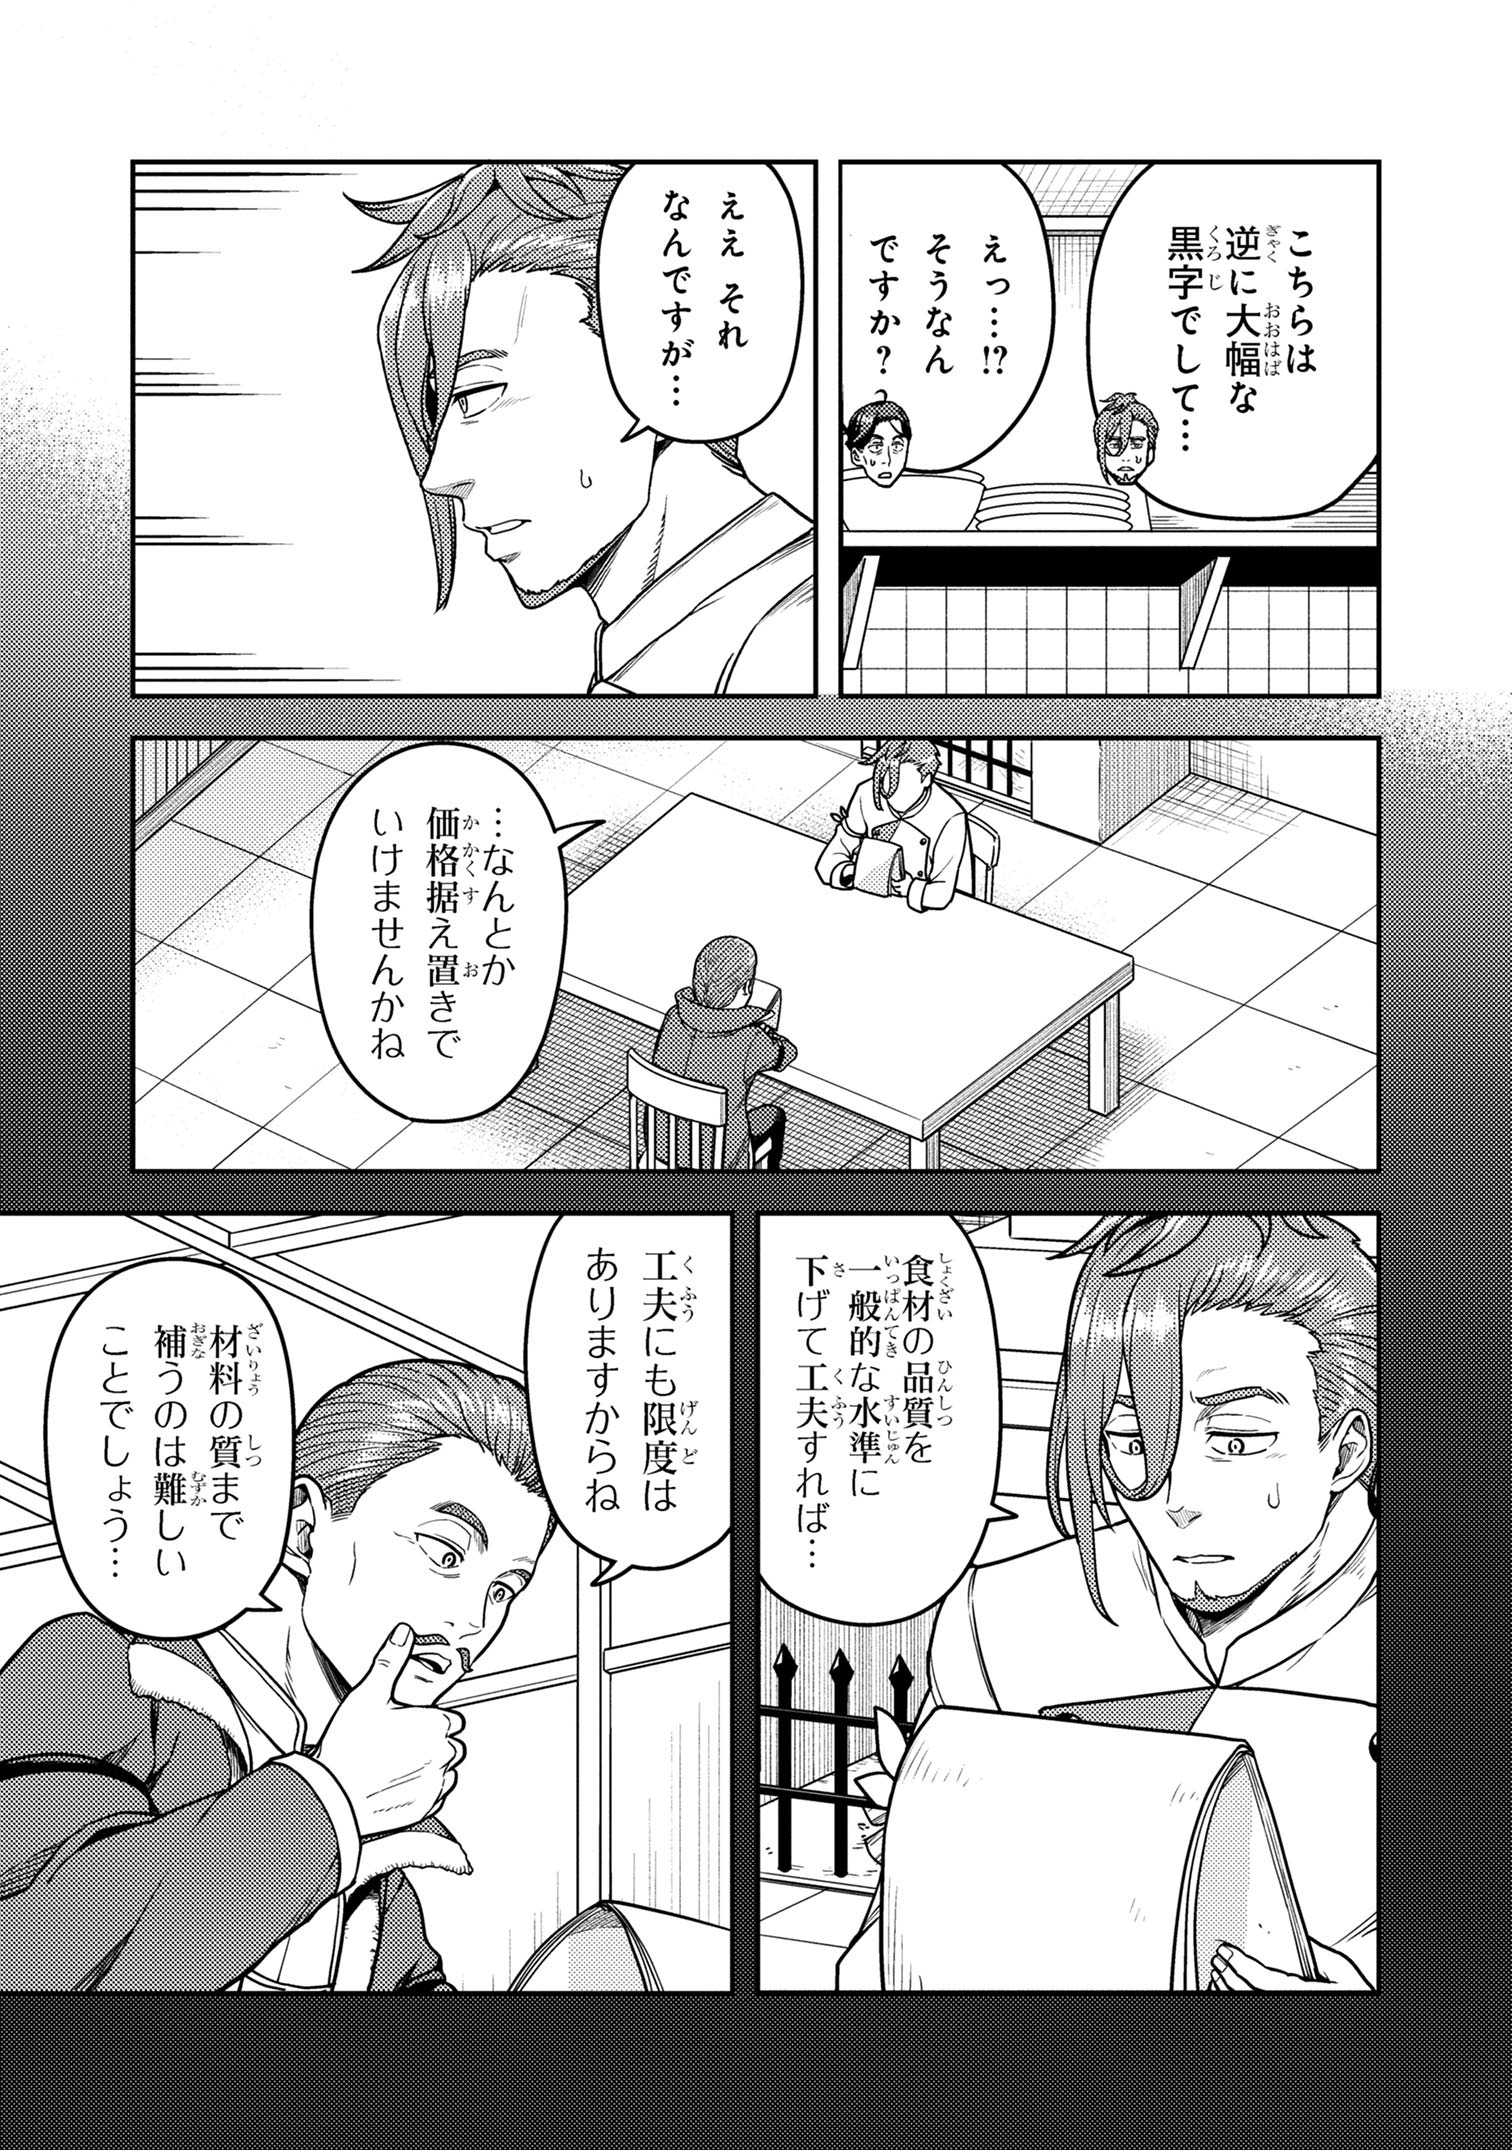 Sasaki to Pii-chan - Chapter 16.2 - Page 2